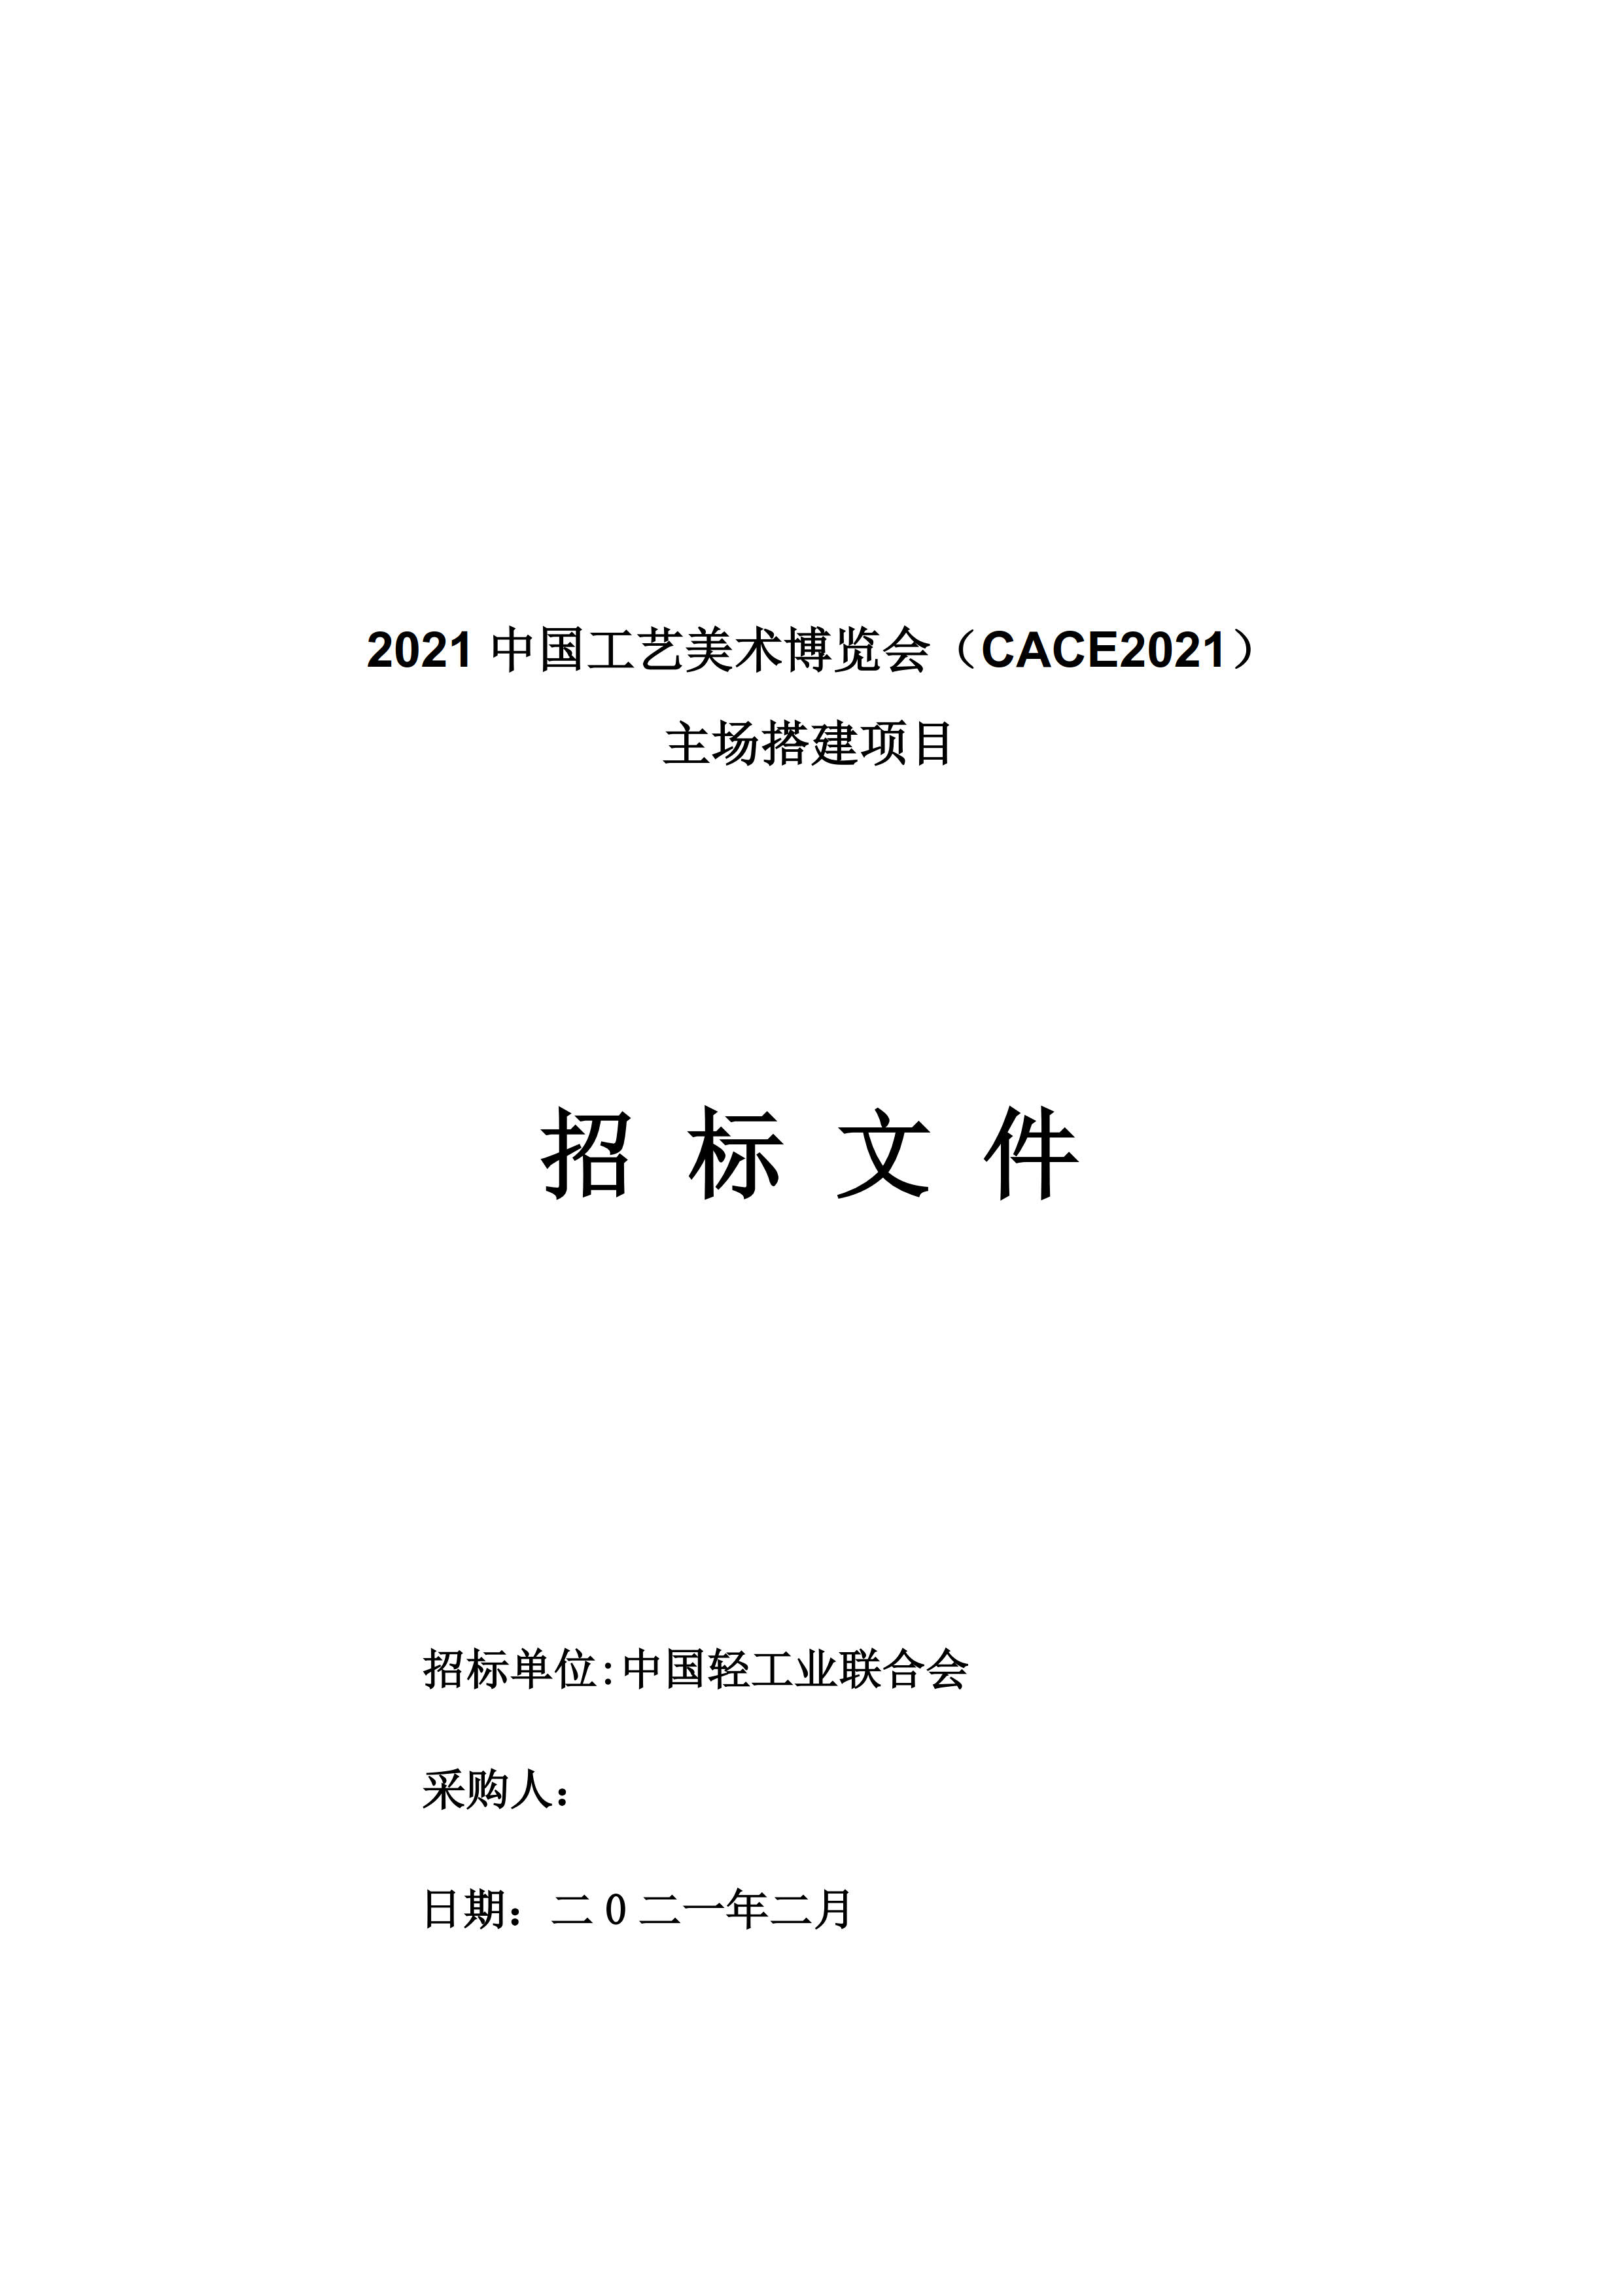 CACE2021搭建商招标书文件1_1.jpg